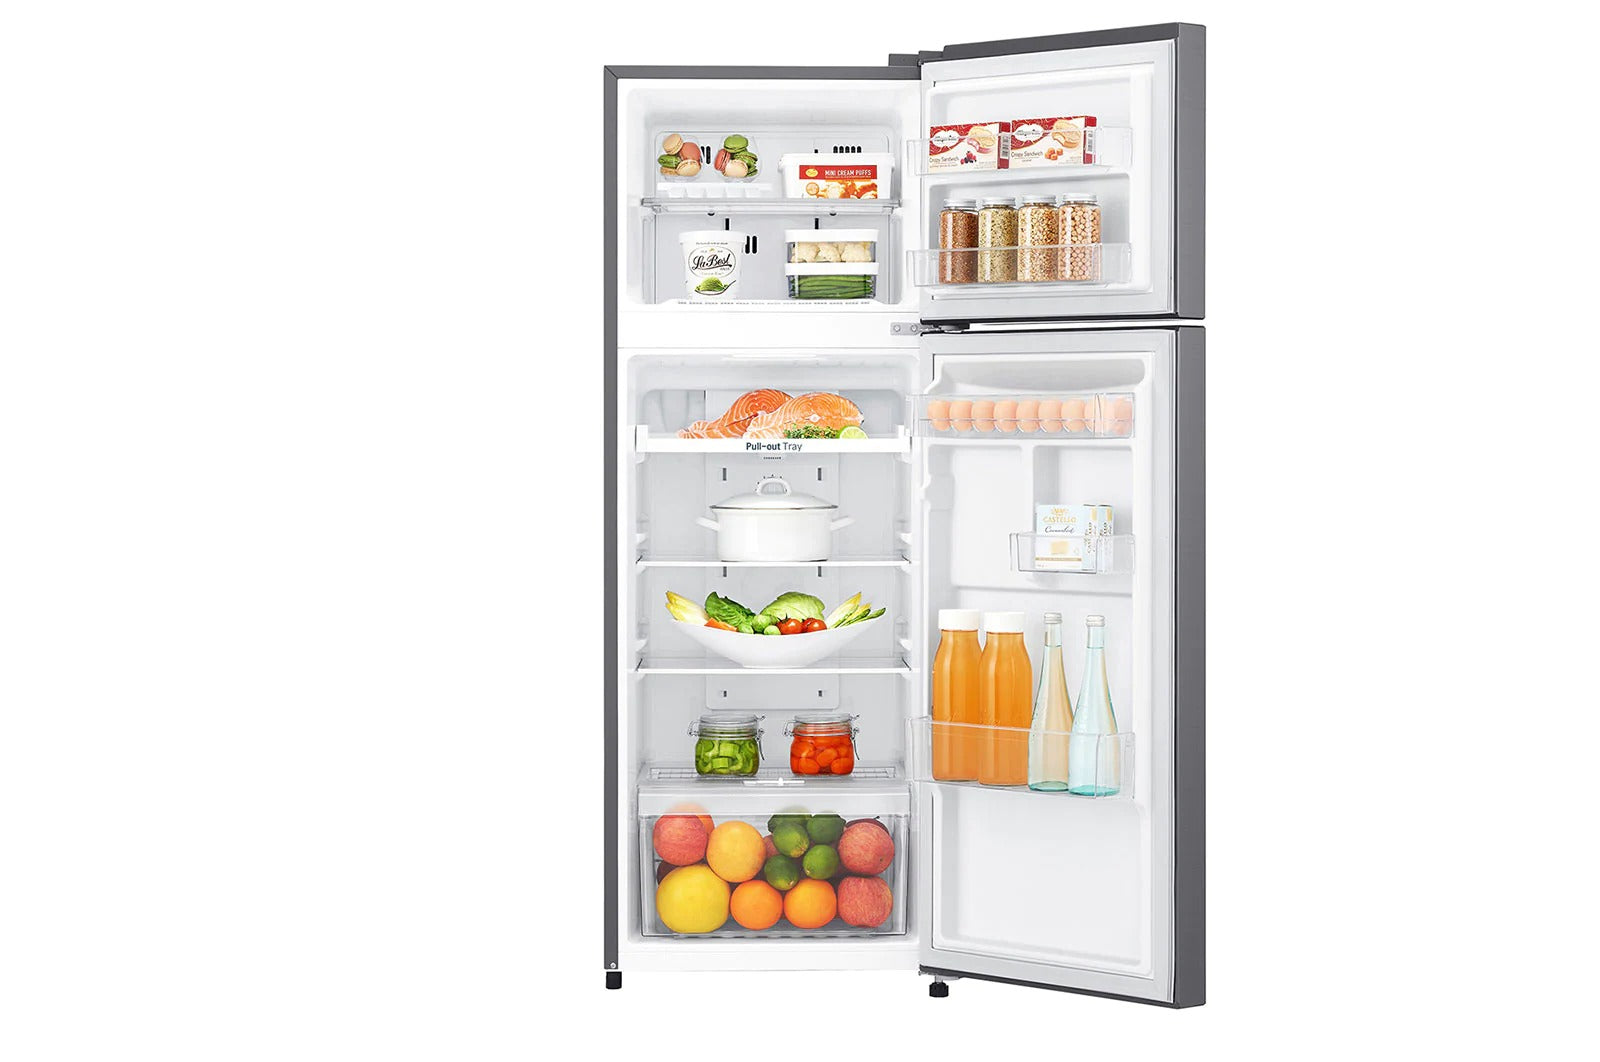 LG 7.2 cu.ft. Smart Inverter Refrigerator (GR-B202SQBB) LG